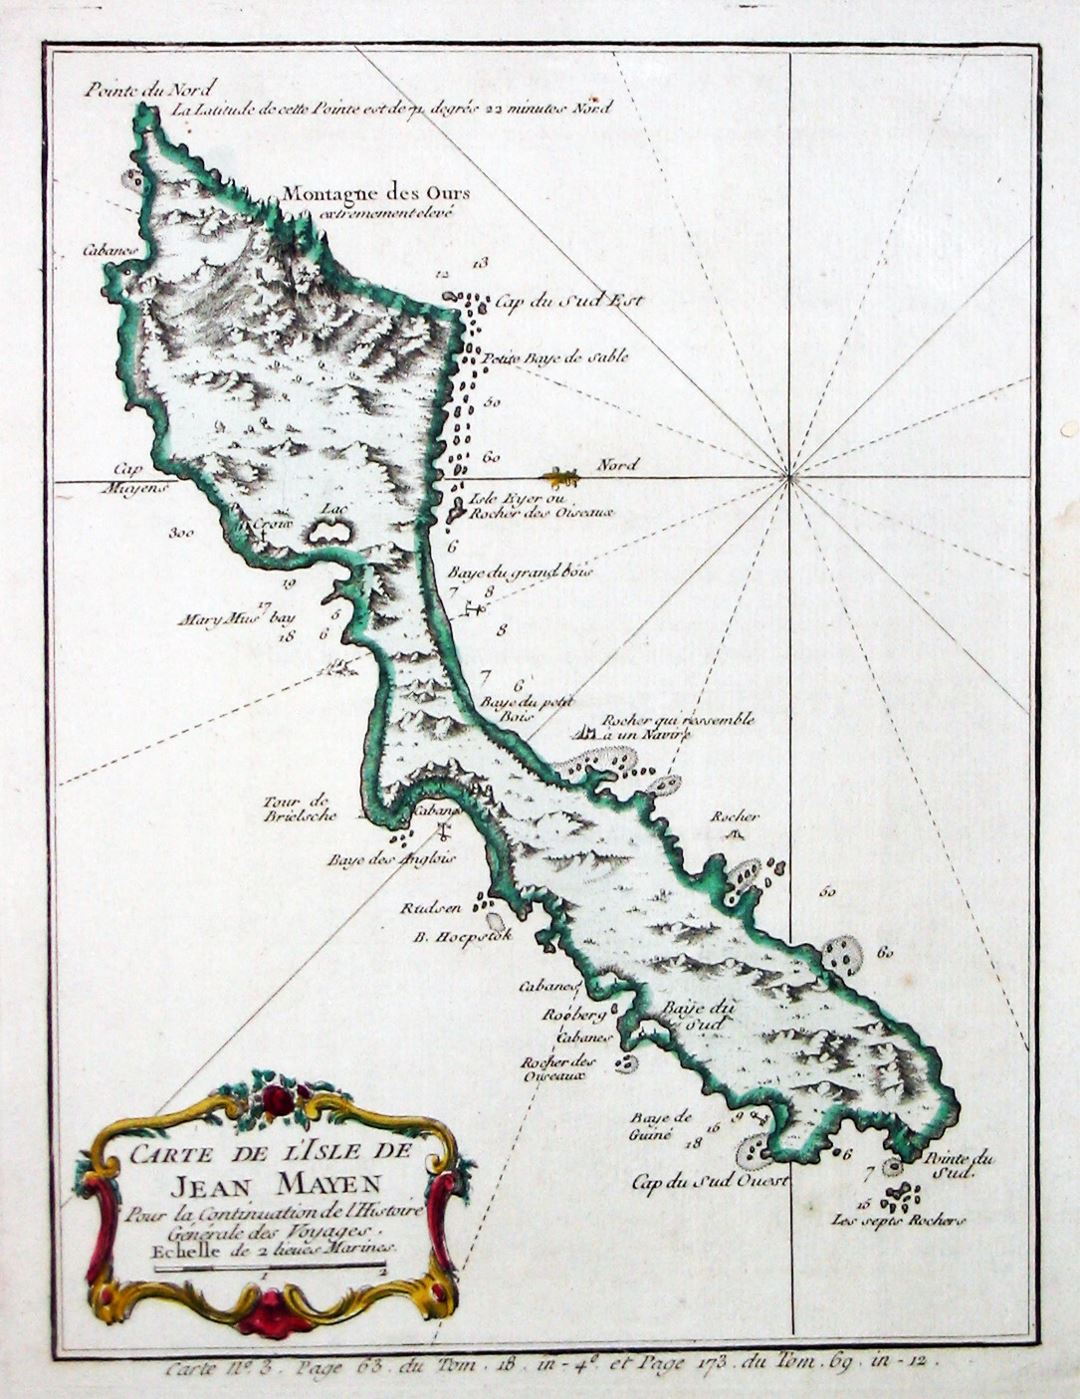 Old map of Jan Mayen island